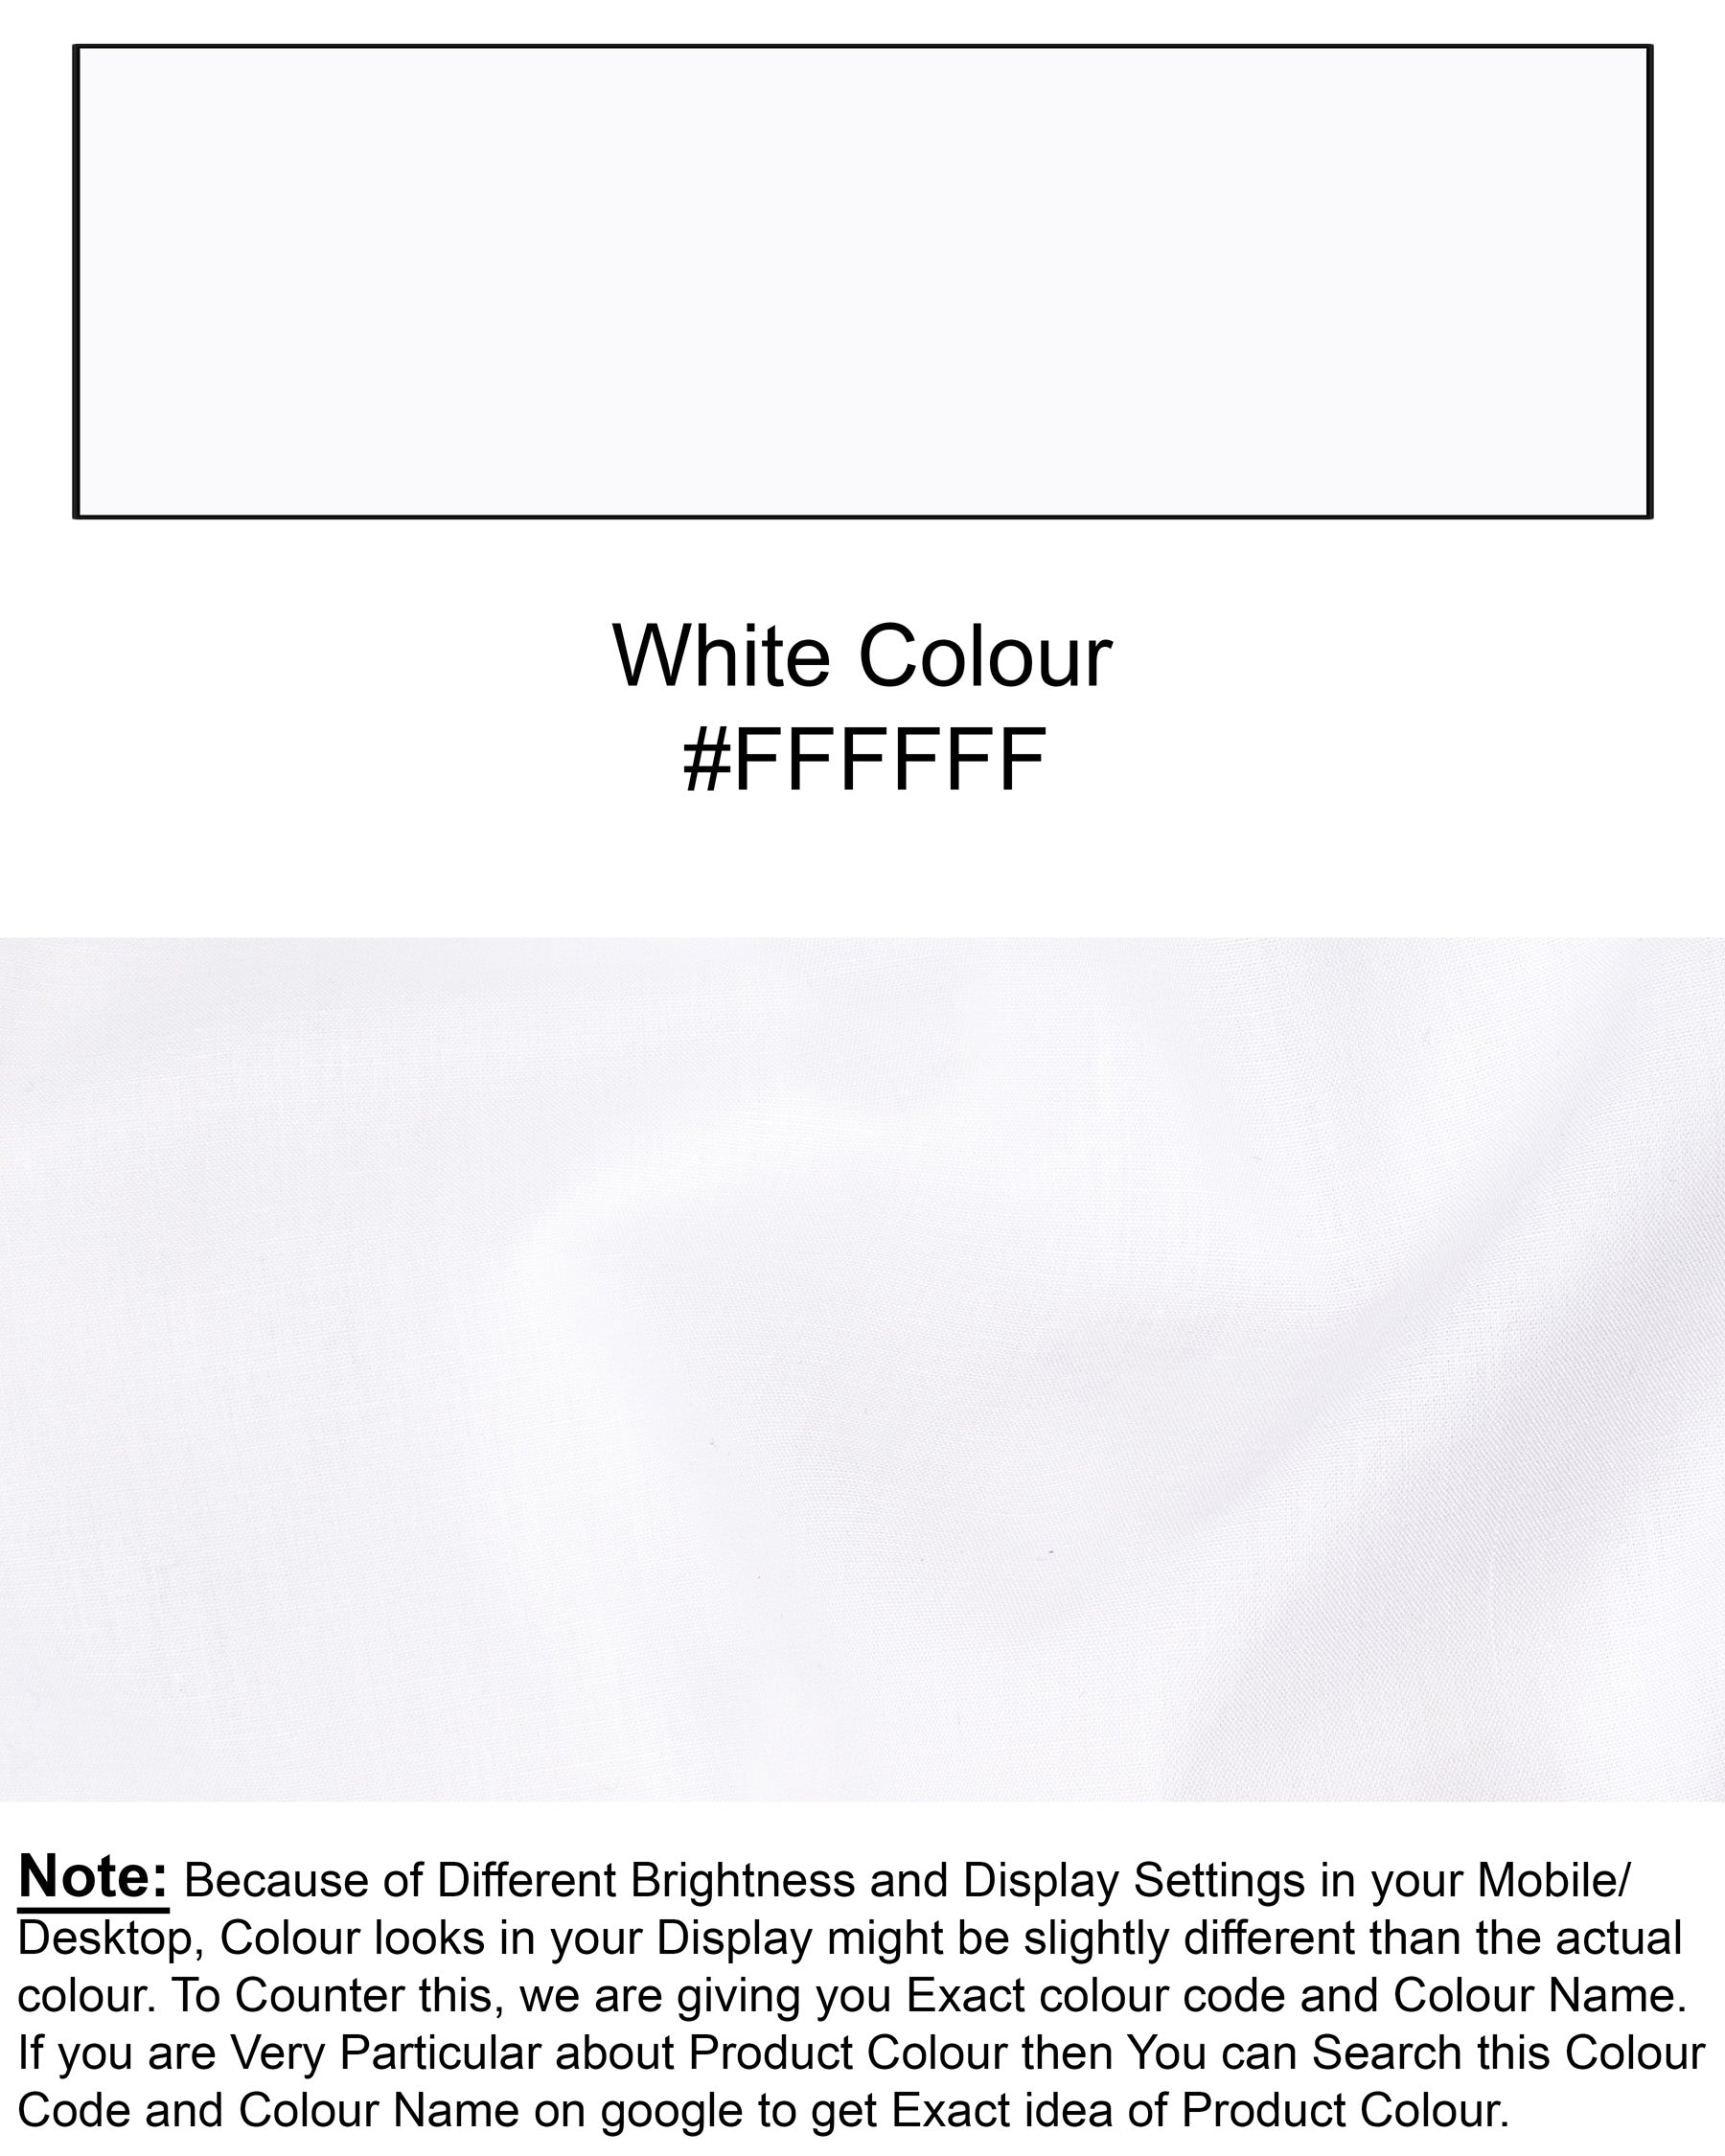 Bright White with Brown Plaid Sleeves Premium Cotton Shirt 6599-P128-38, 6599-P128-H-38, 6599-P128-39, 6599-P128-H-39, 6599-P128-40, 6599-P128-H-40, 6599-P128-42, 6599-P128-H-42, 6599-P128-44, 6599-P128-H-44, 6599-P128-46, 6599-P128-H-46, 6599-P128-48, 6599-P128-H-48, 6599-P128-50, 6599-P128-H-50, 6599-P128-52, 6599-P128-H-52